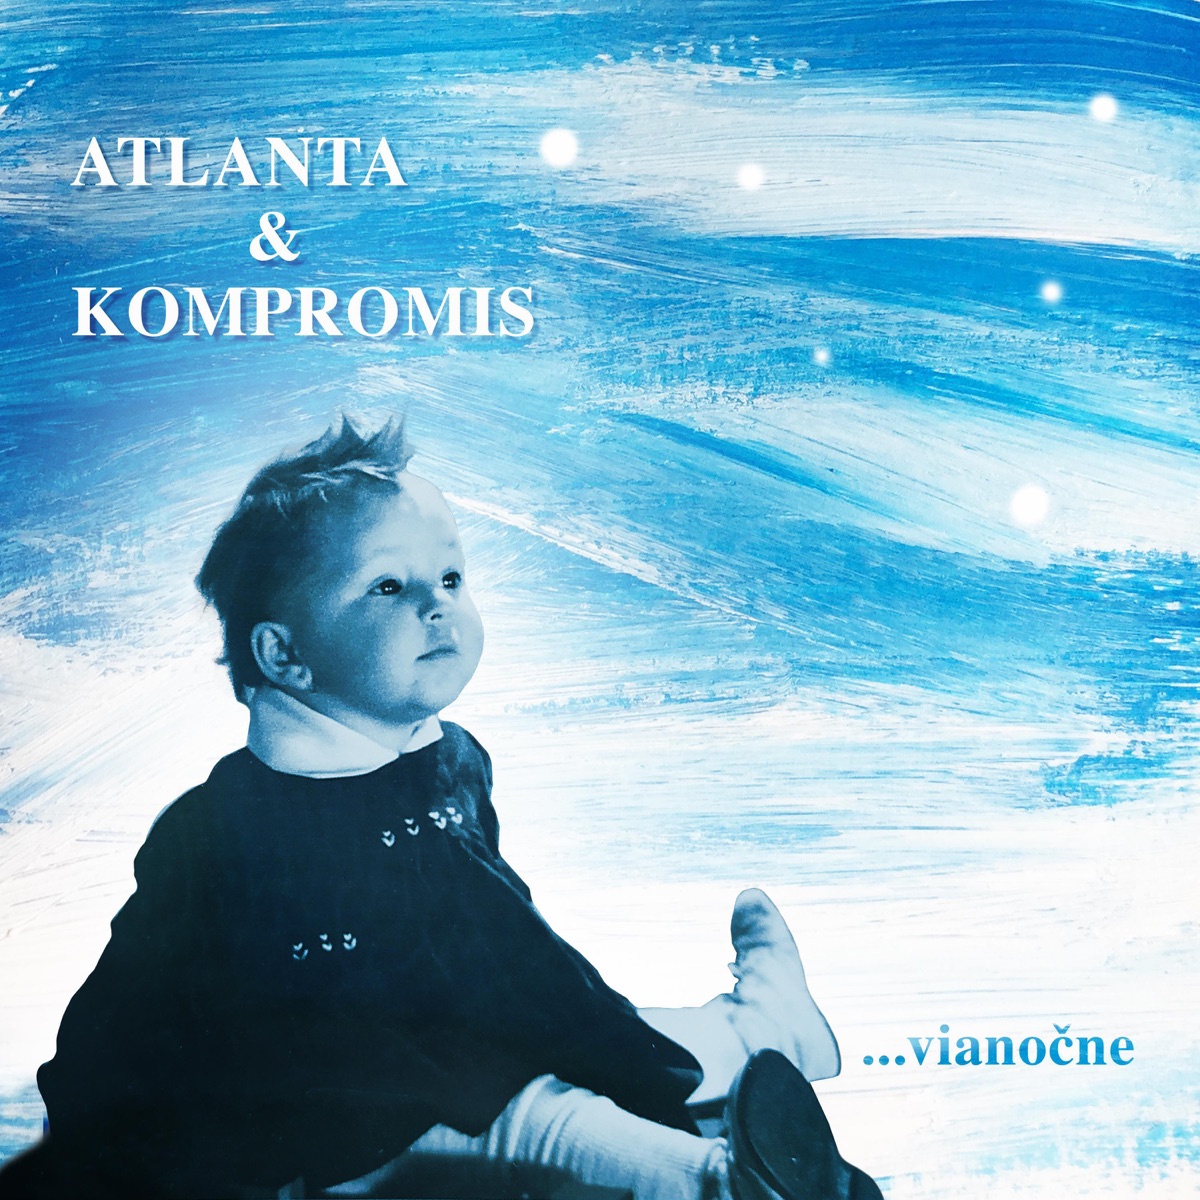 Vianočne - Album by Atlanta & KOMPROMIS - Apple Music